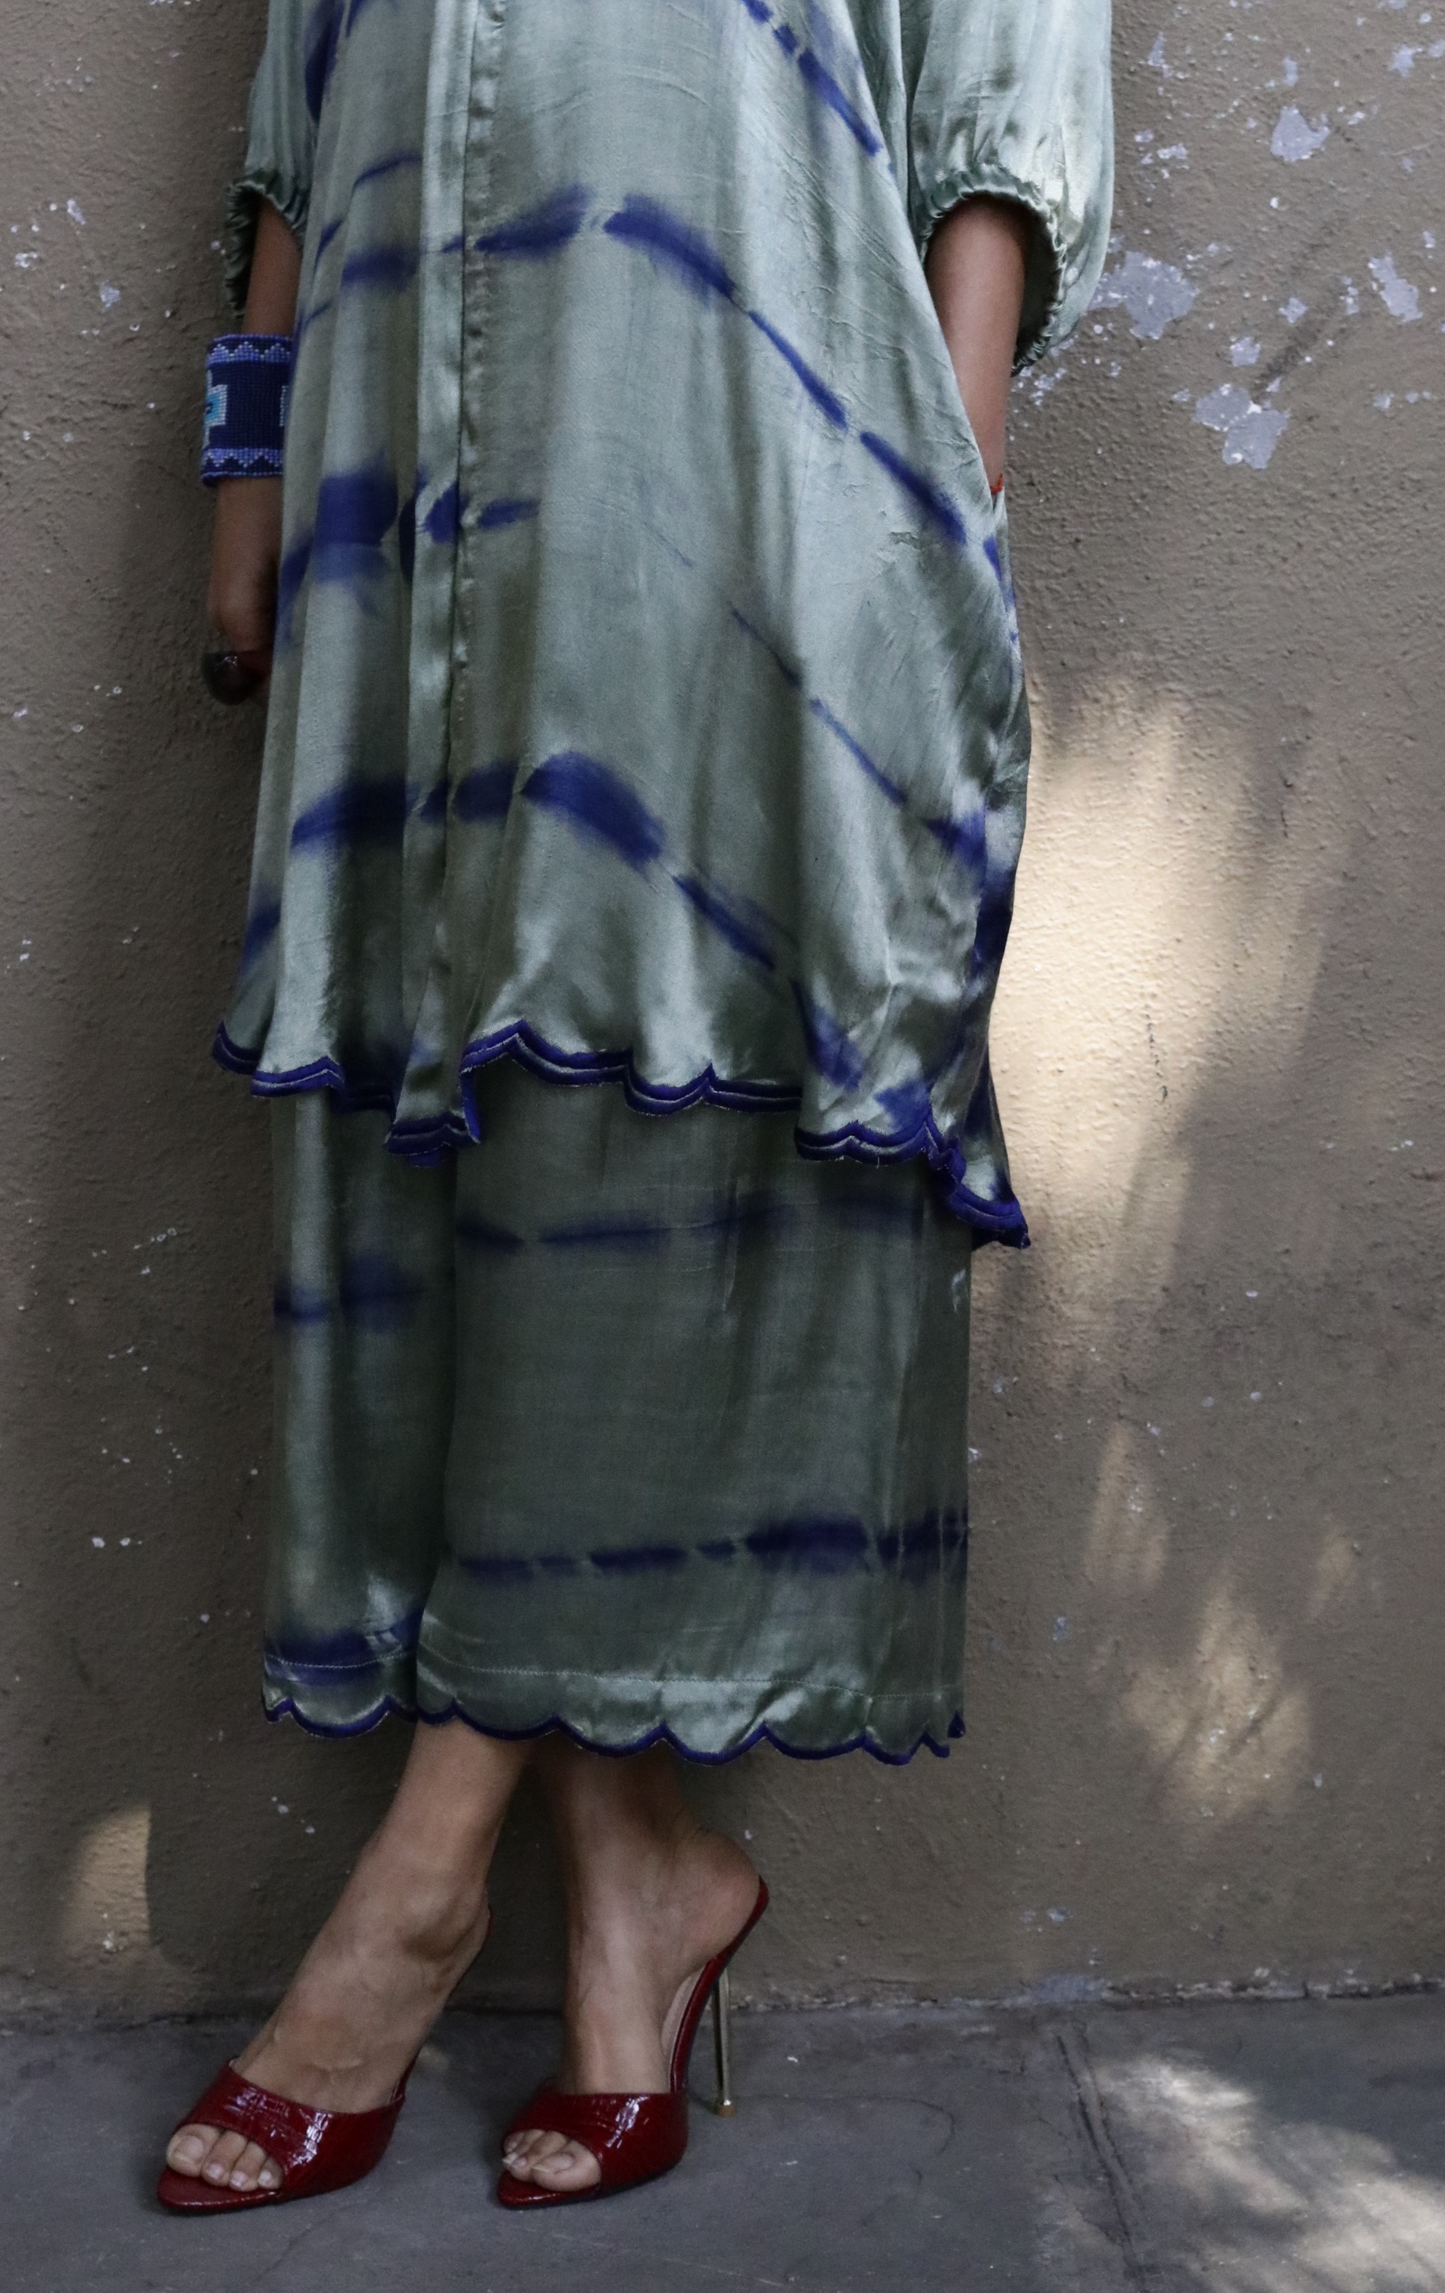 Tie & Dye Shibori 'Moss Garden' Blue  Green Mashru Co-ord Set : Buy Kurta Palazzo Mushru Co-ord Set